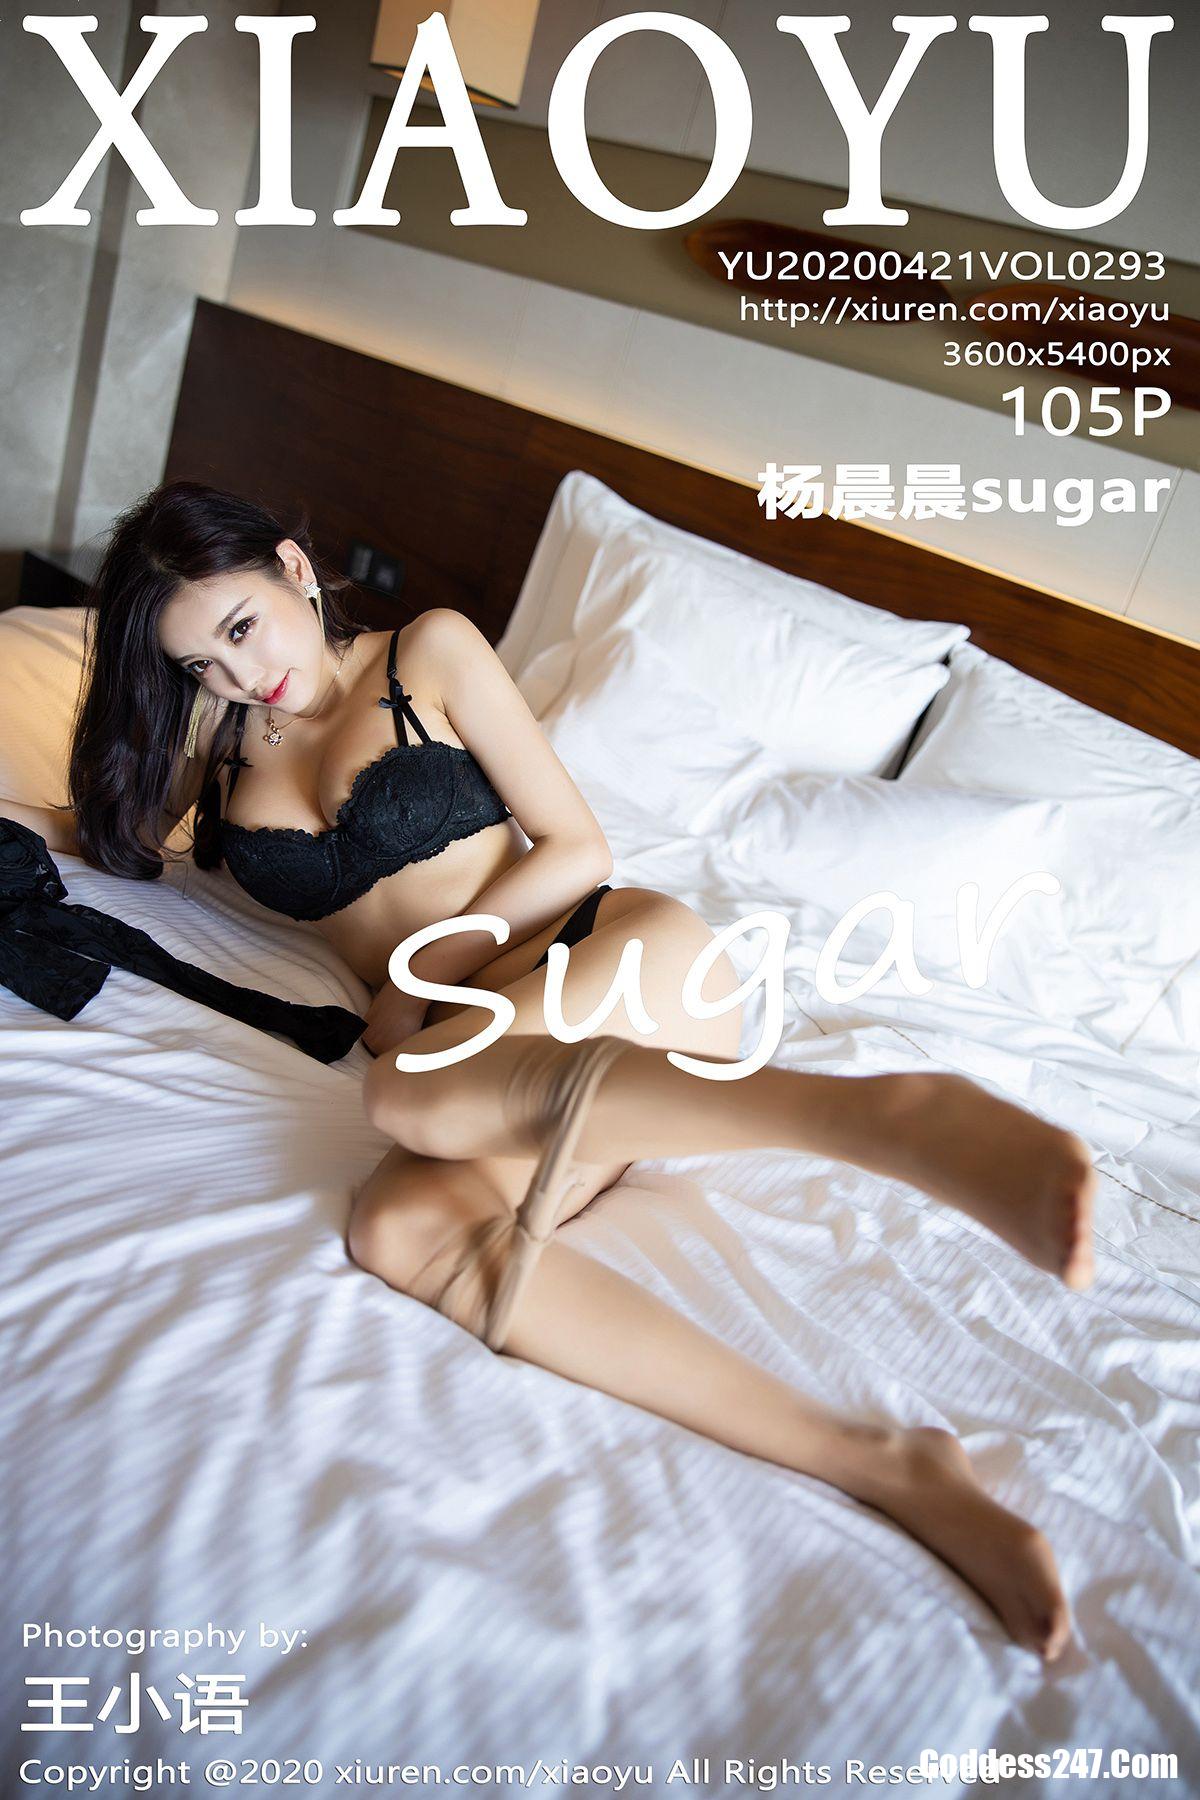 XiaoYu Vol.293 杨晨晨sugar 1